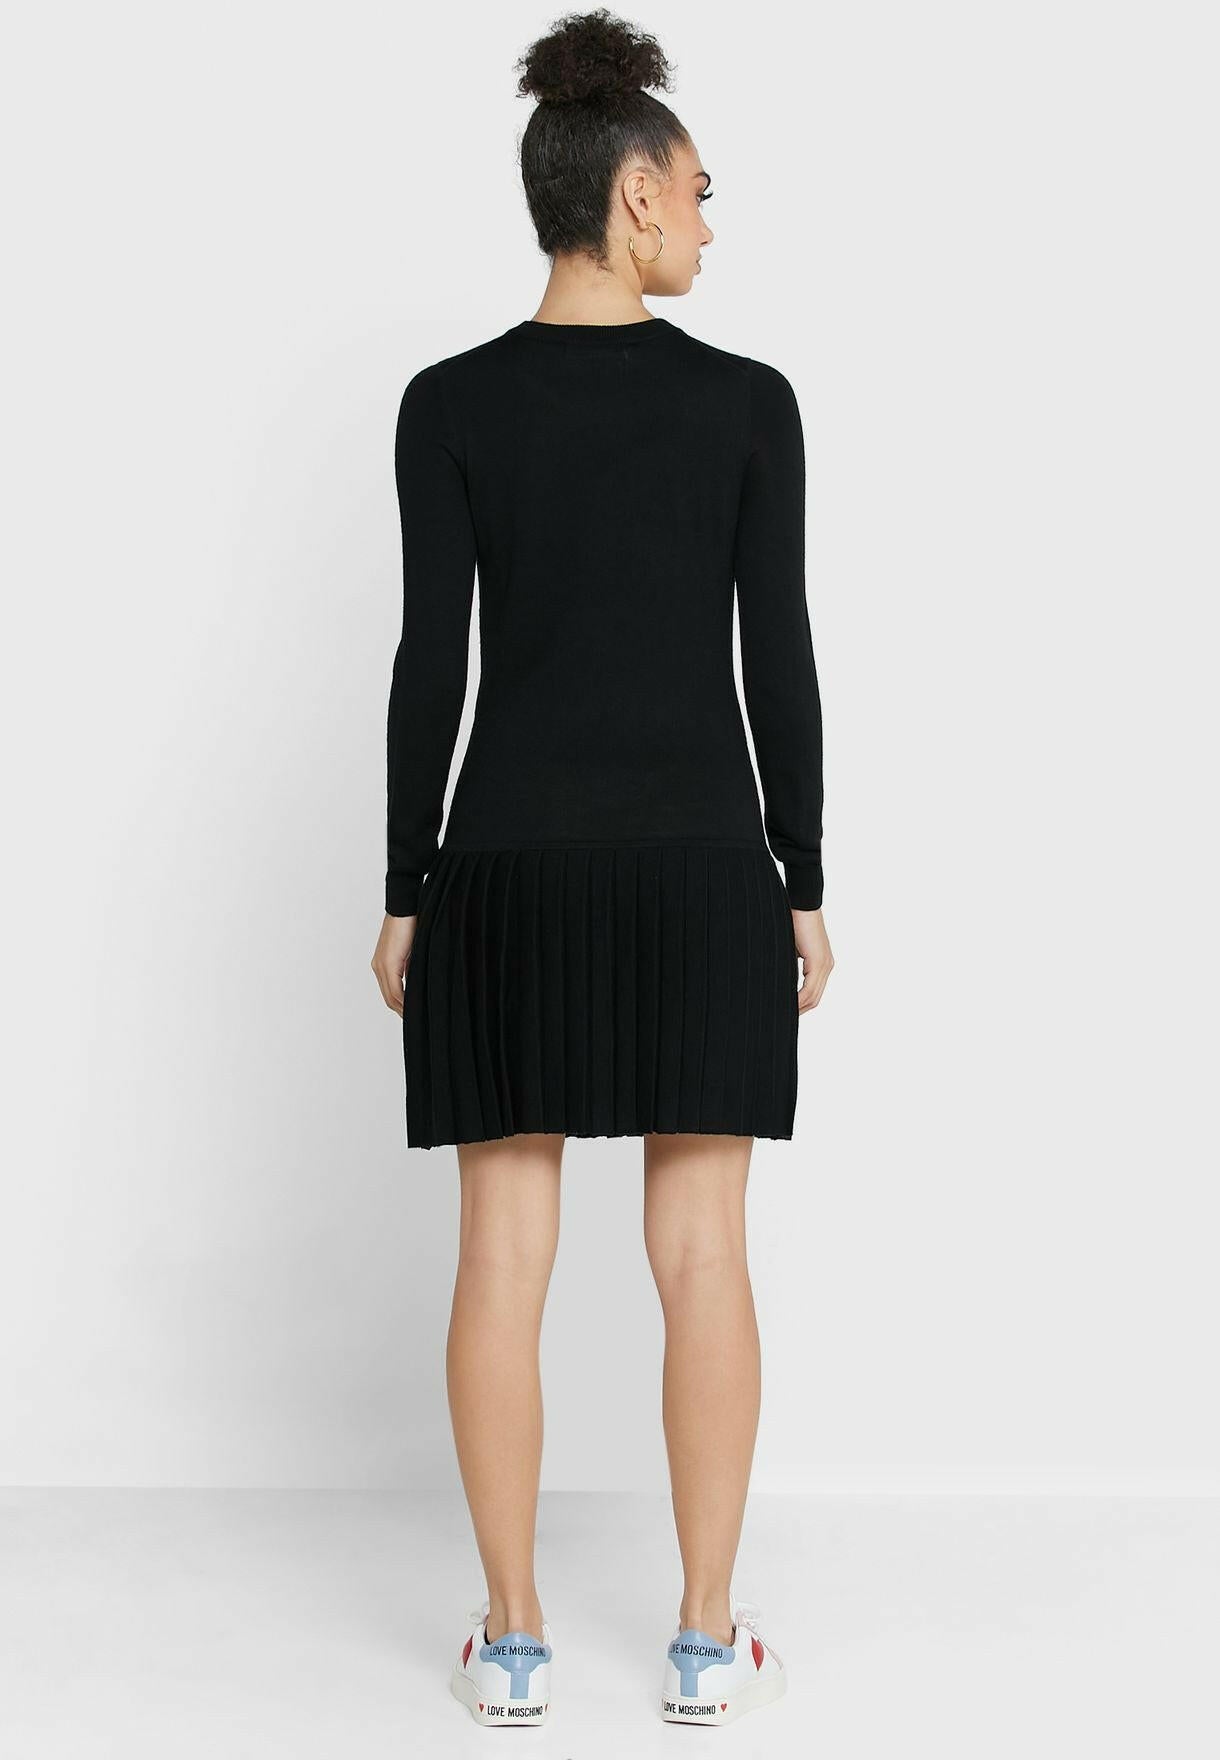 Love Moschino Black Acrylic Dress - GENUINE AUTHENTIC BRAND LLC  